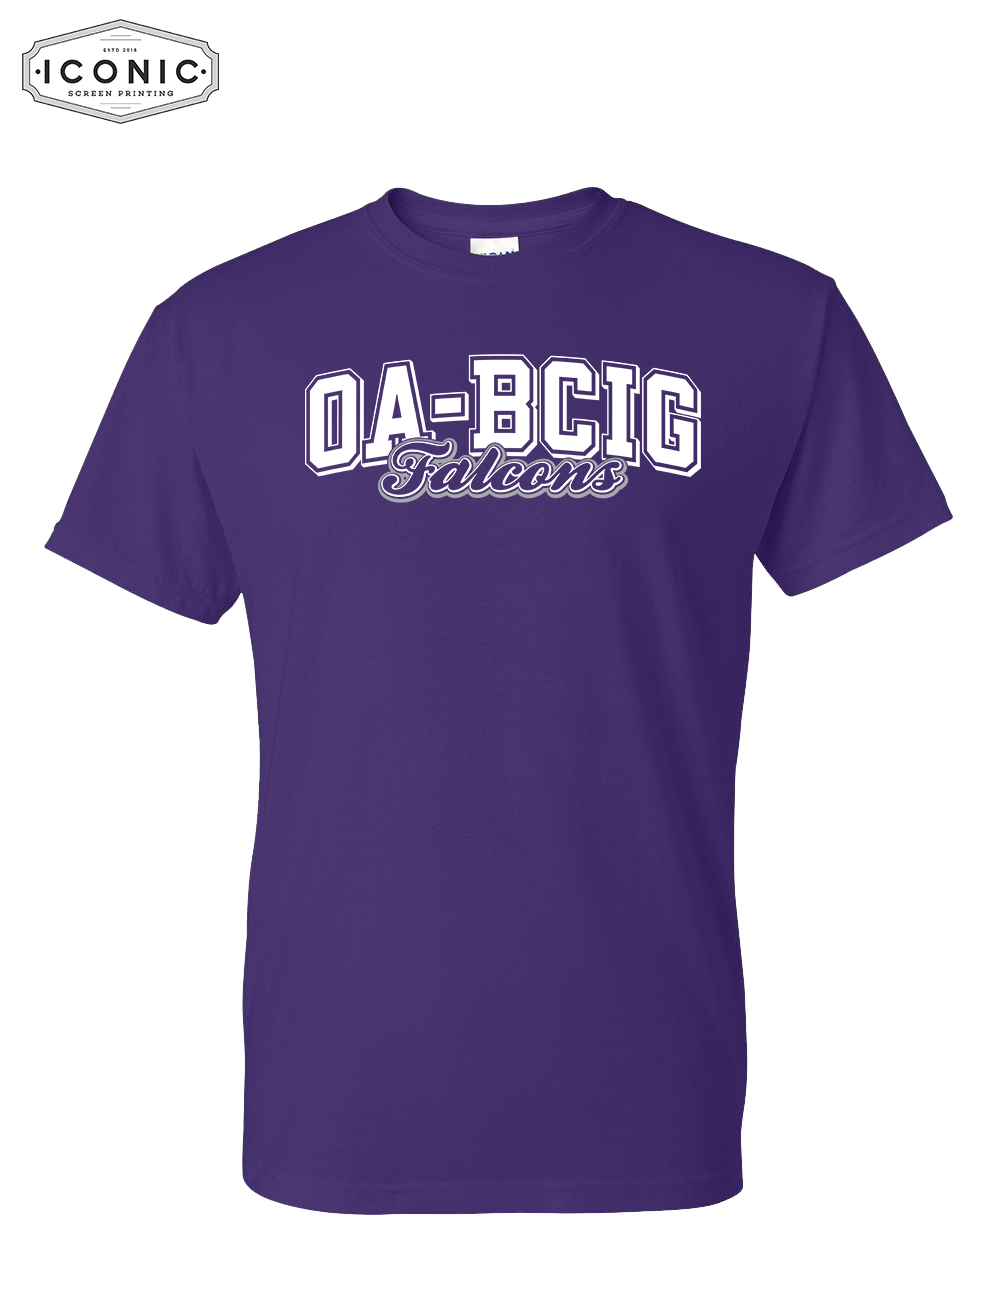 OA-BCIG Falcons School - DryBlend T-shirt